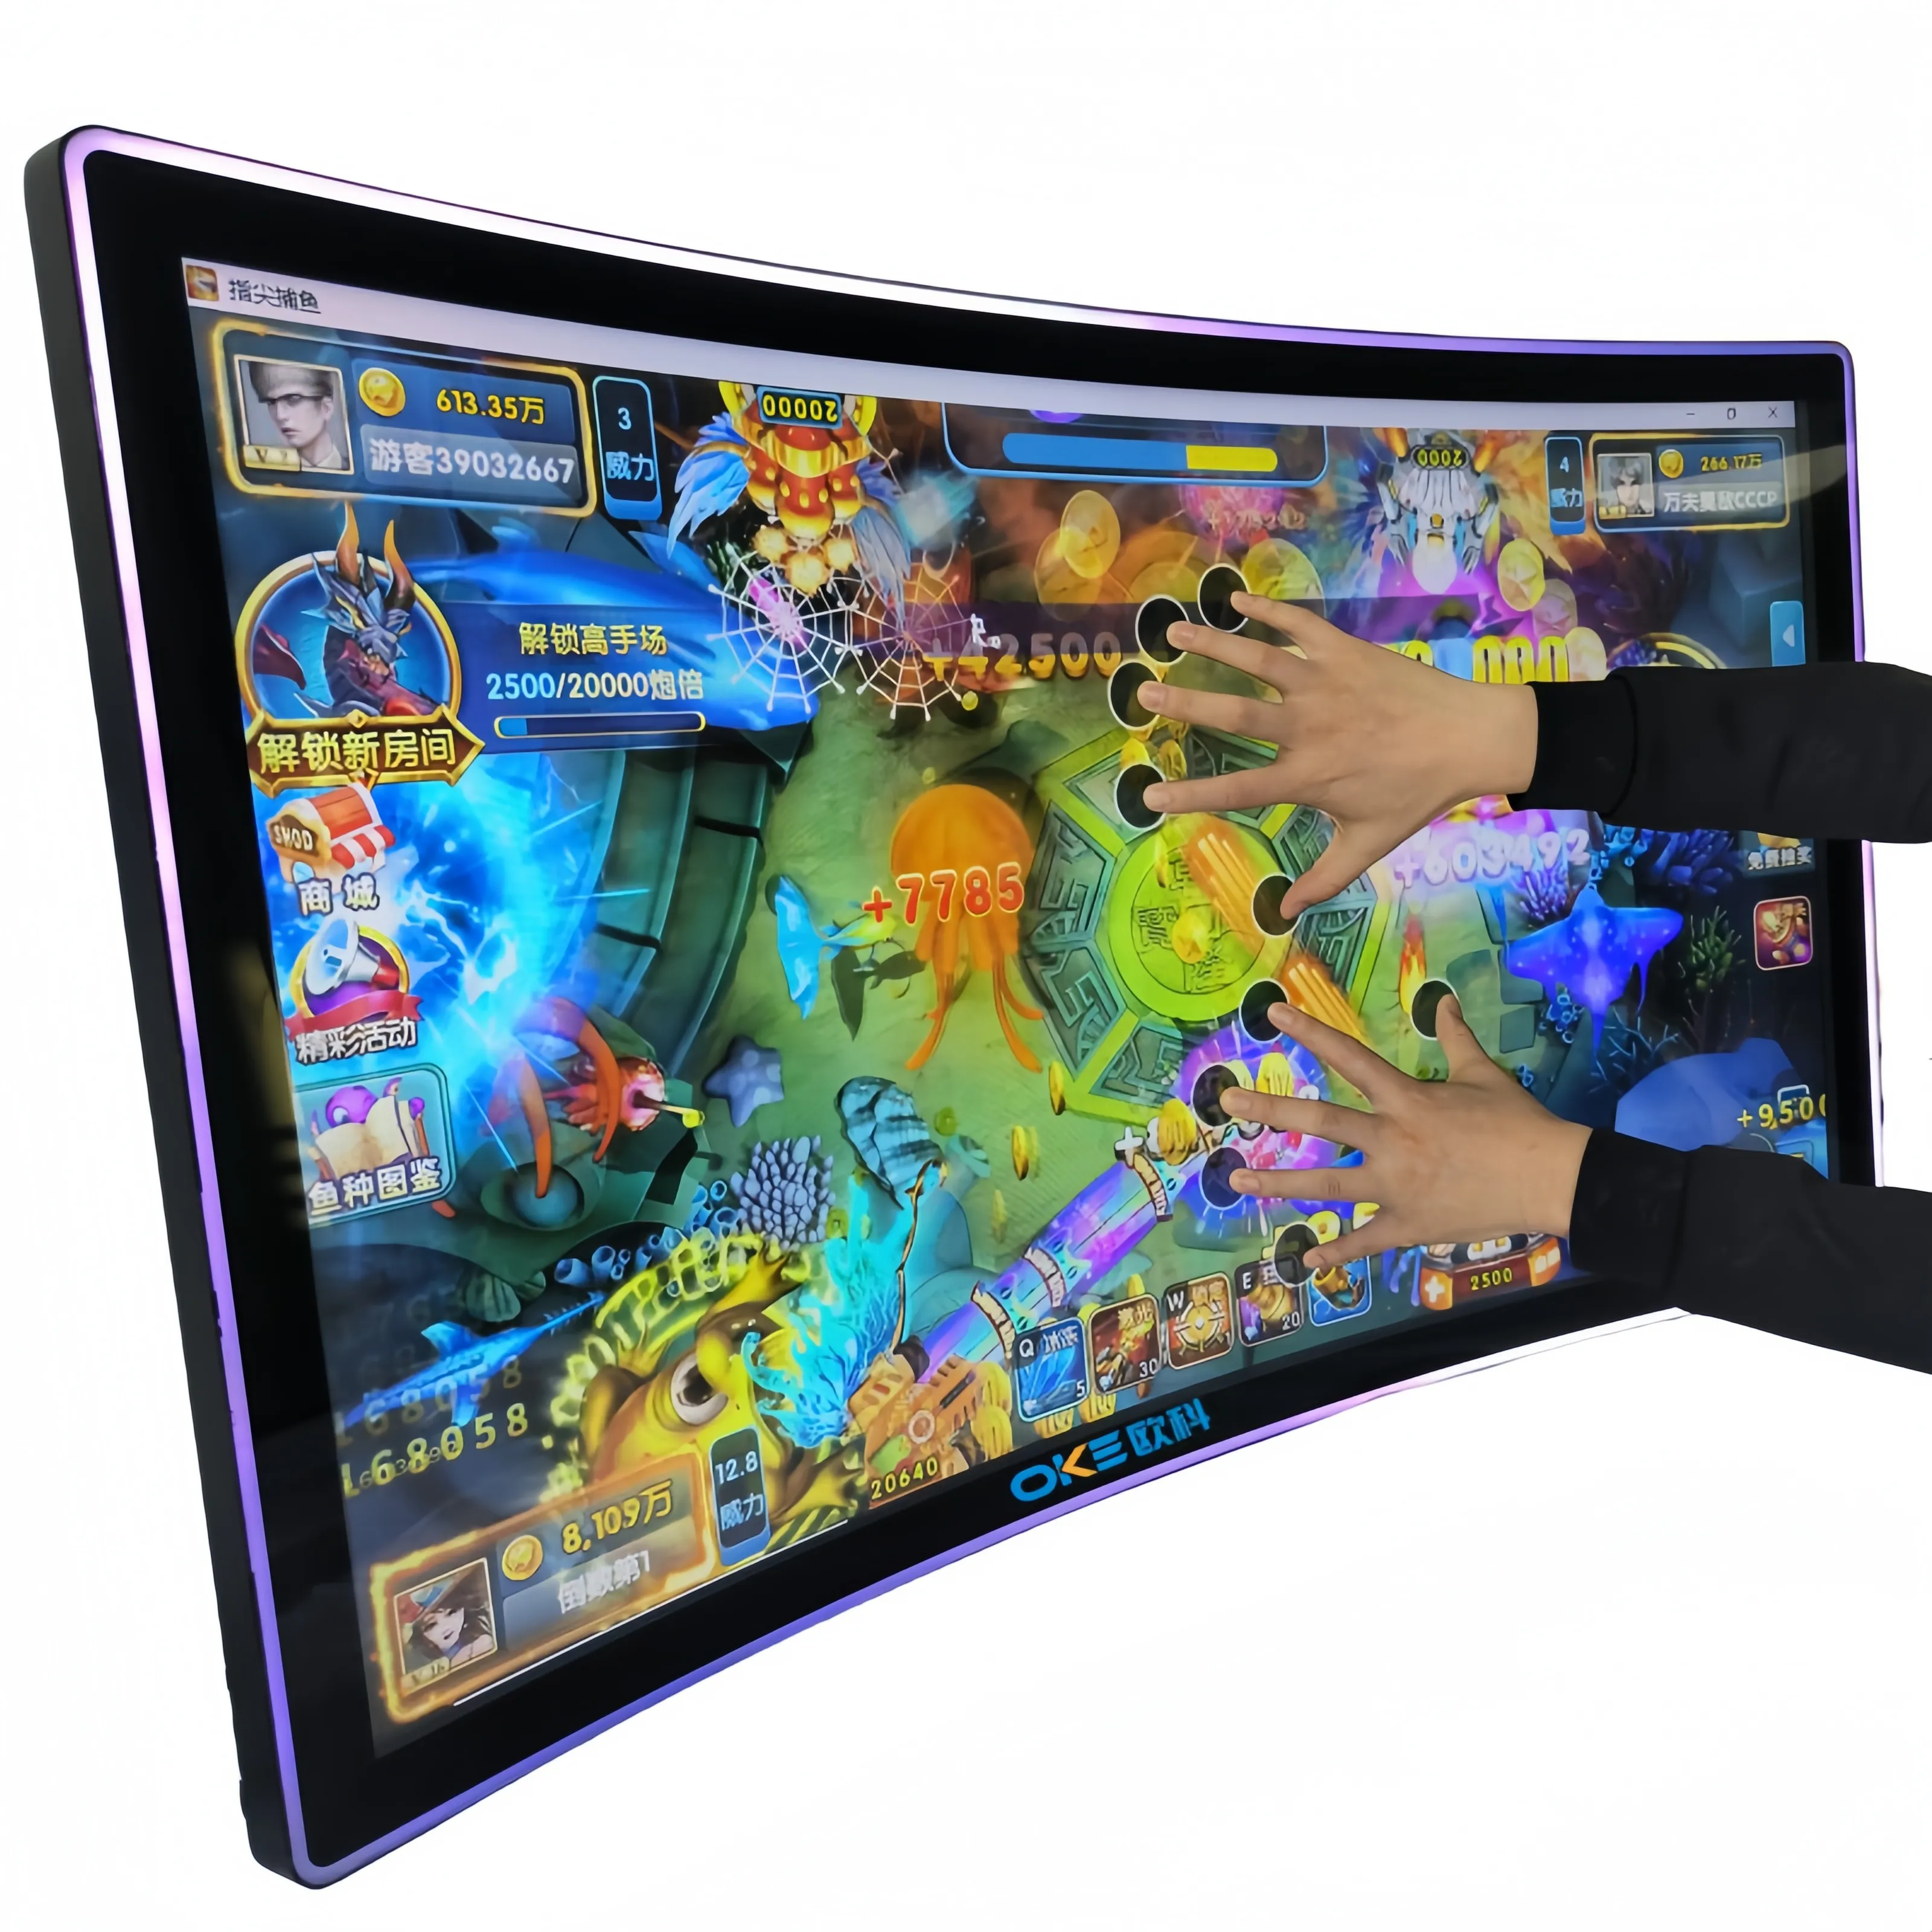 OKE 27 인치 Pcap 정전식 터치 게임 모니터 화면 LCD 디스플레이 옵션 곡선 화면 C/S-곡선 화면 수직 패널